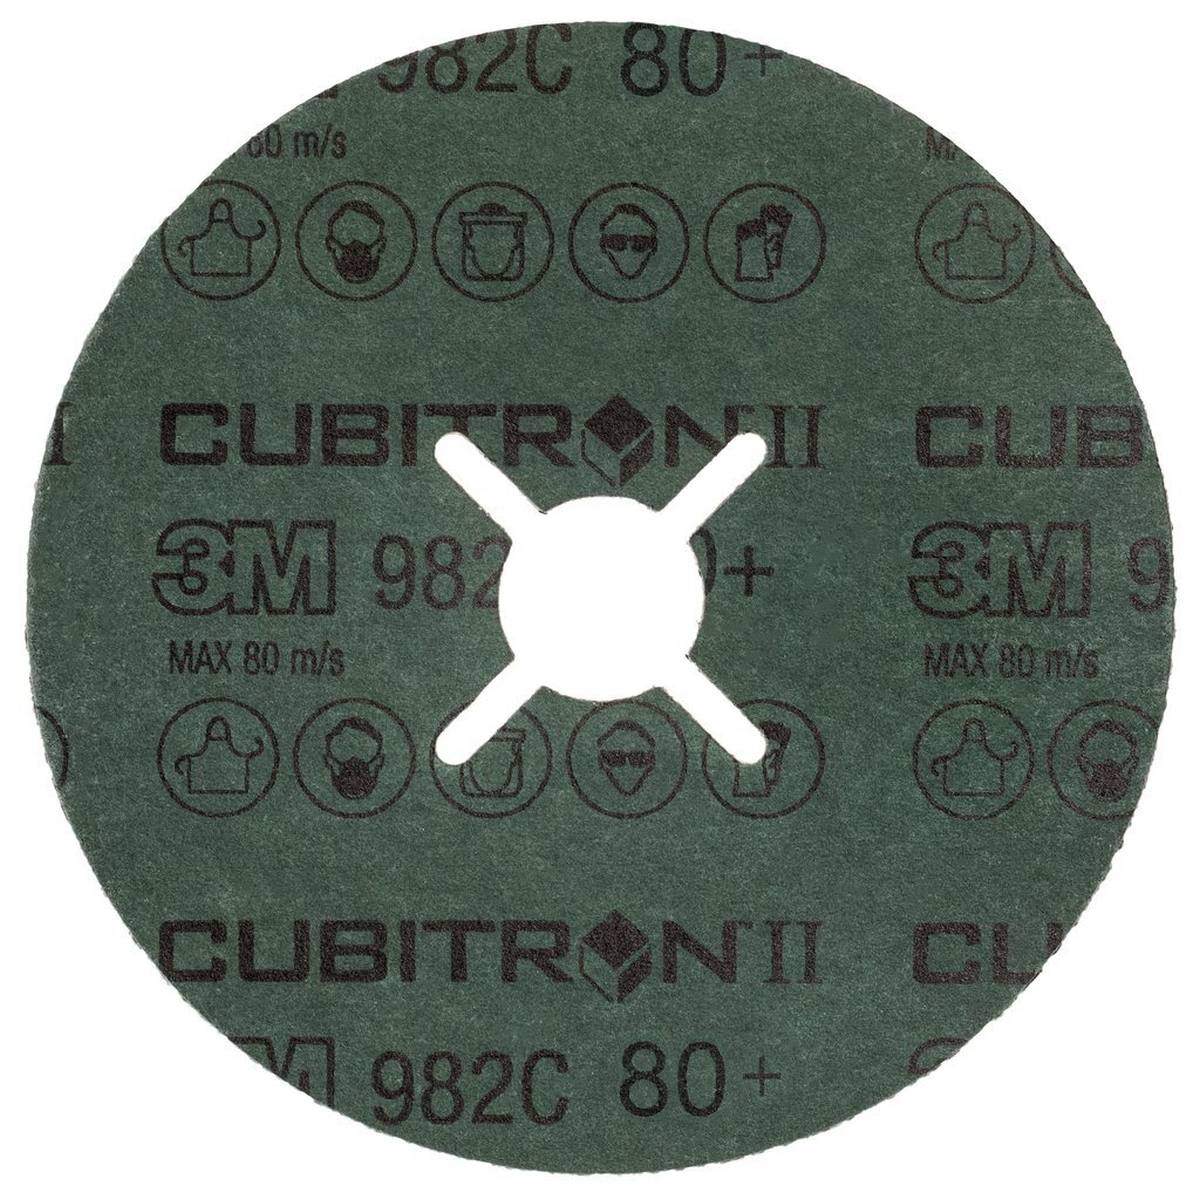 3M Cubitron II Fiberscheibe 982C, 115 mm, 22,23 mm, 80+ #460706